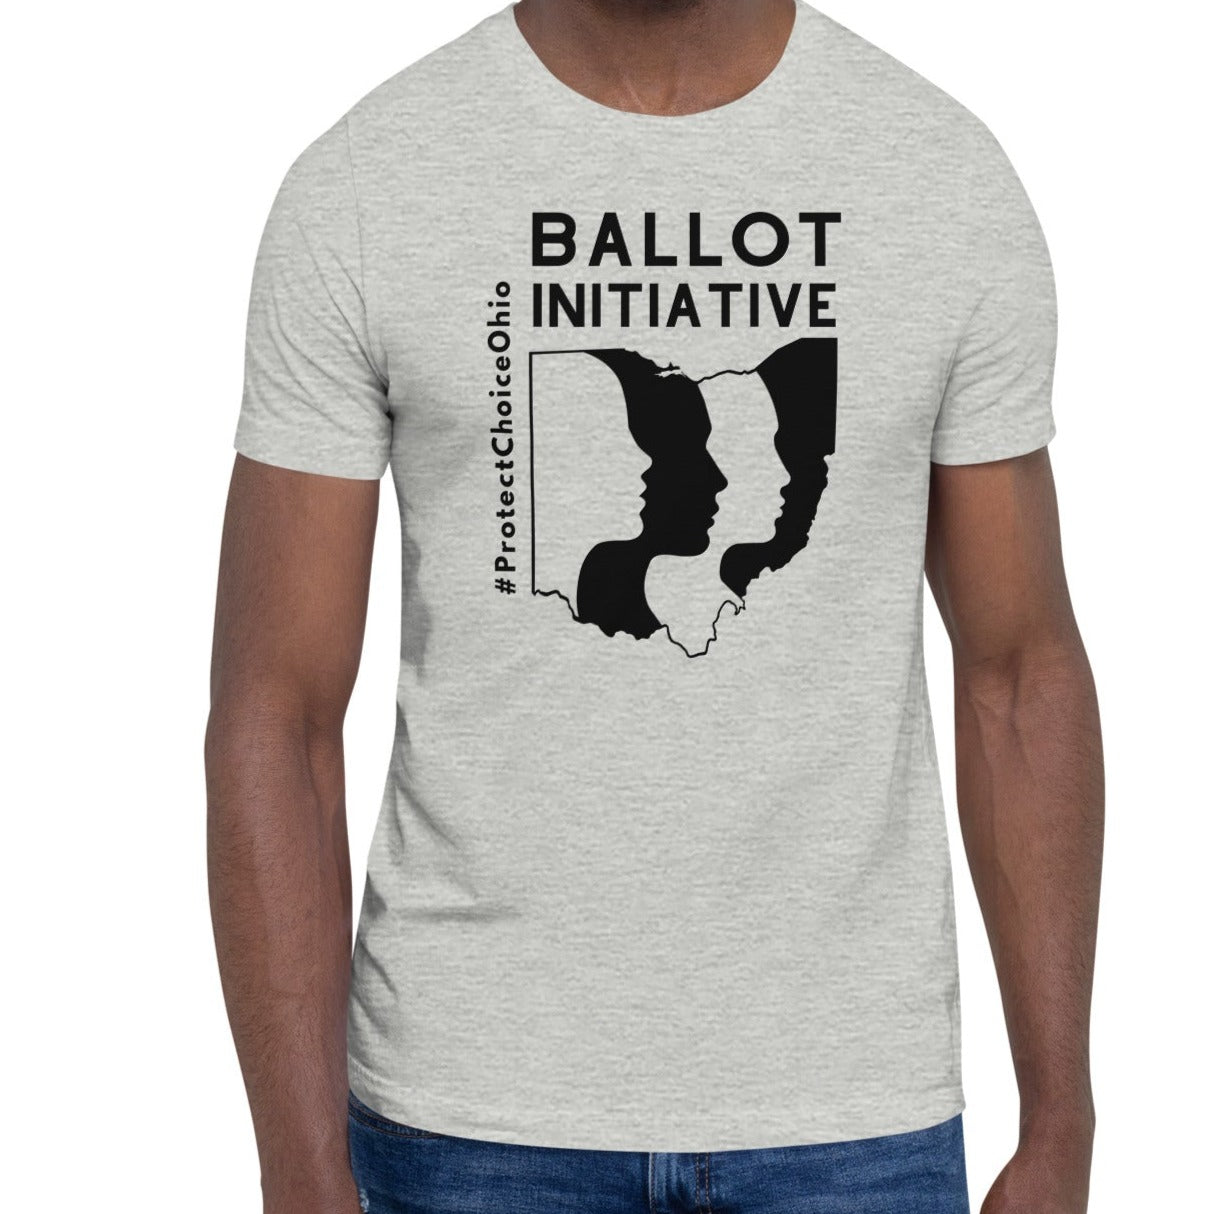 Ballot Initiative - Unisex t-shirt - Multiple Colors